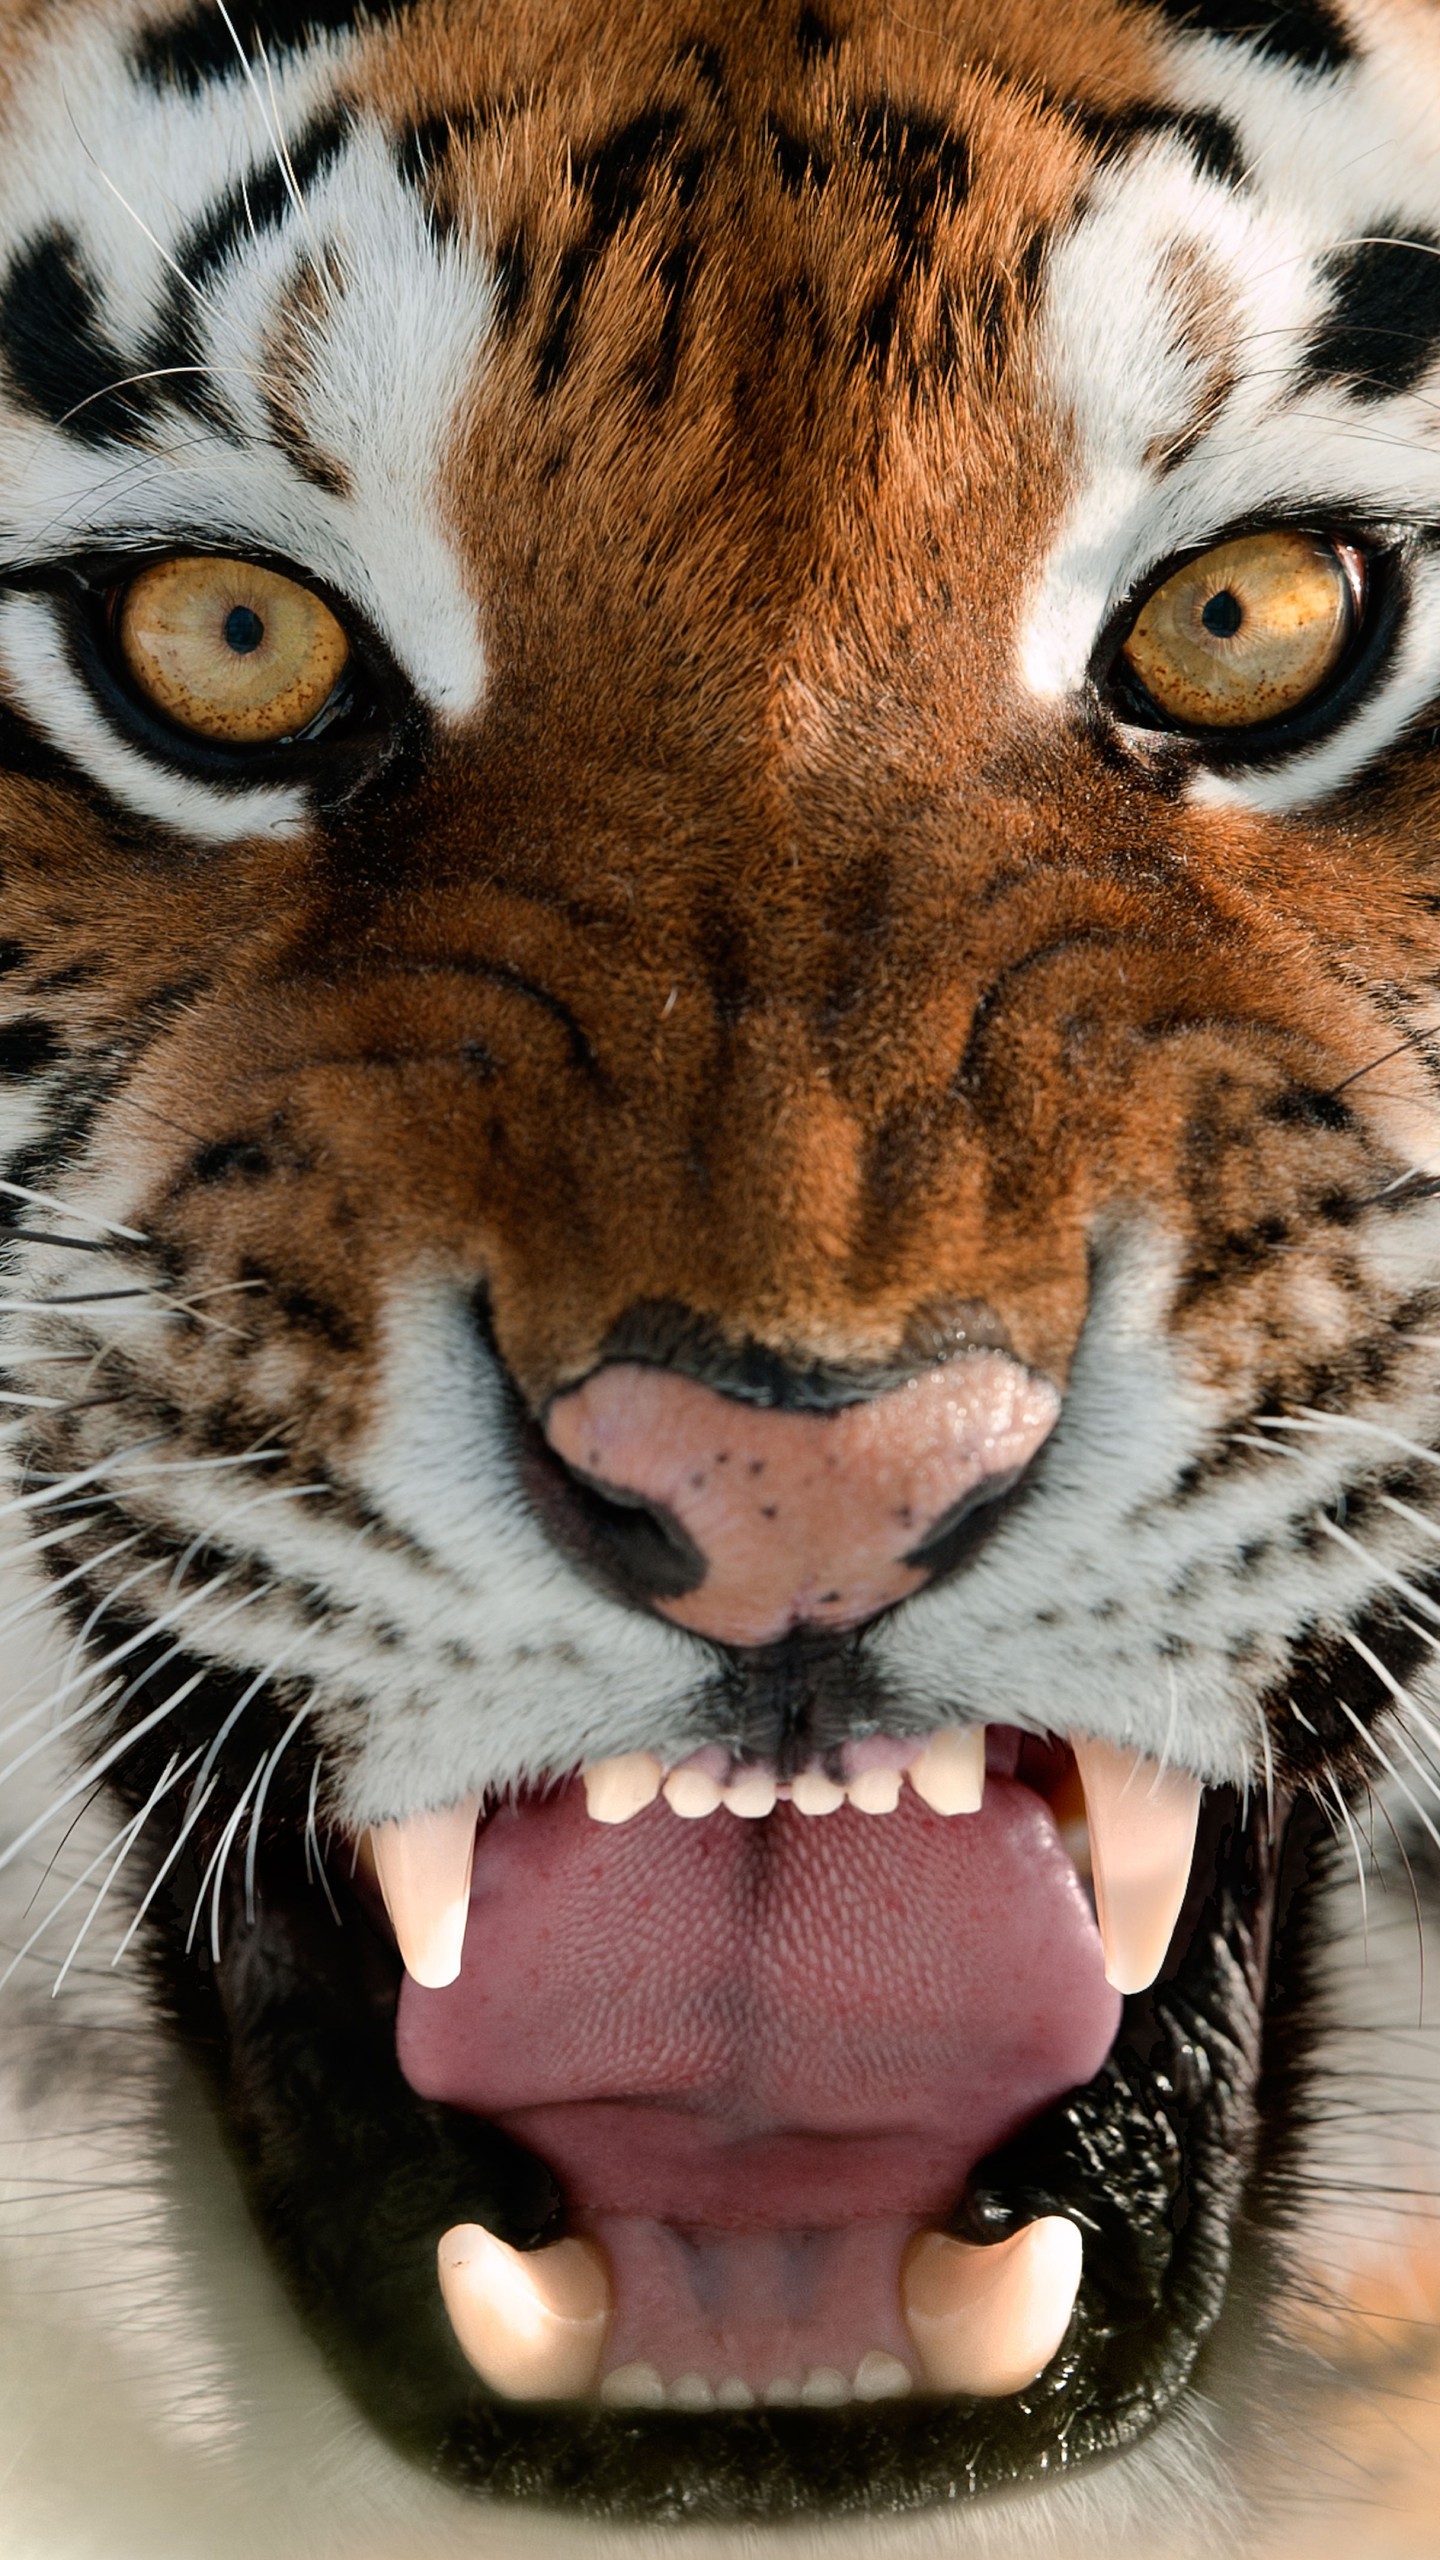 5,000+ Striking Tiger Pictures & Images [HD] - Pixabay